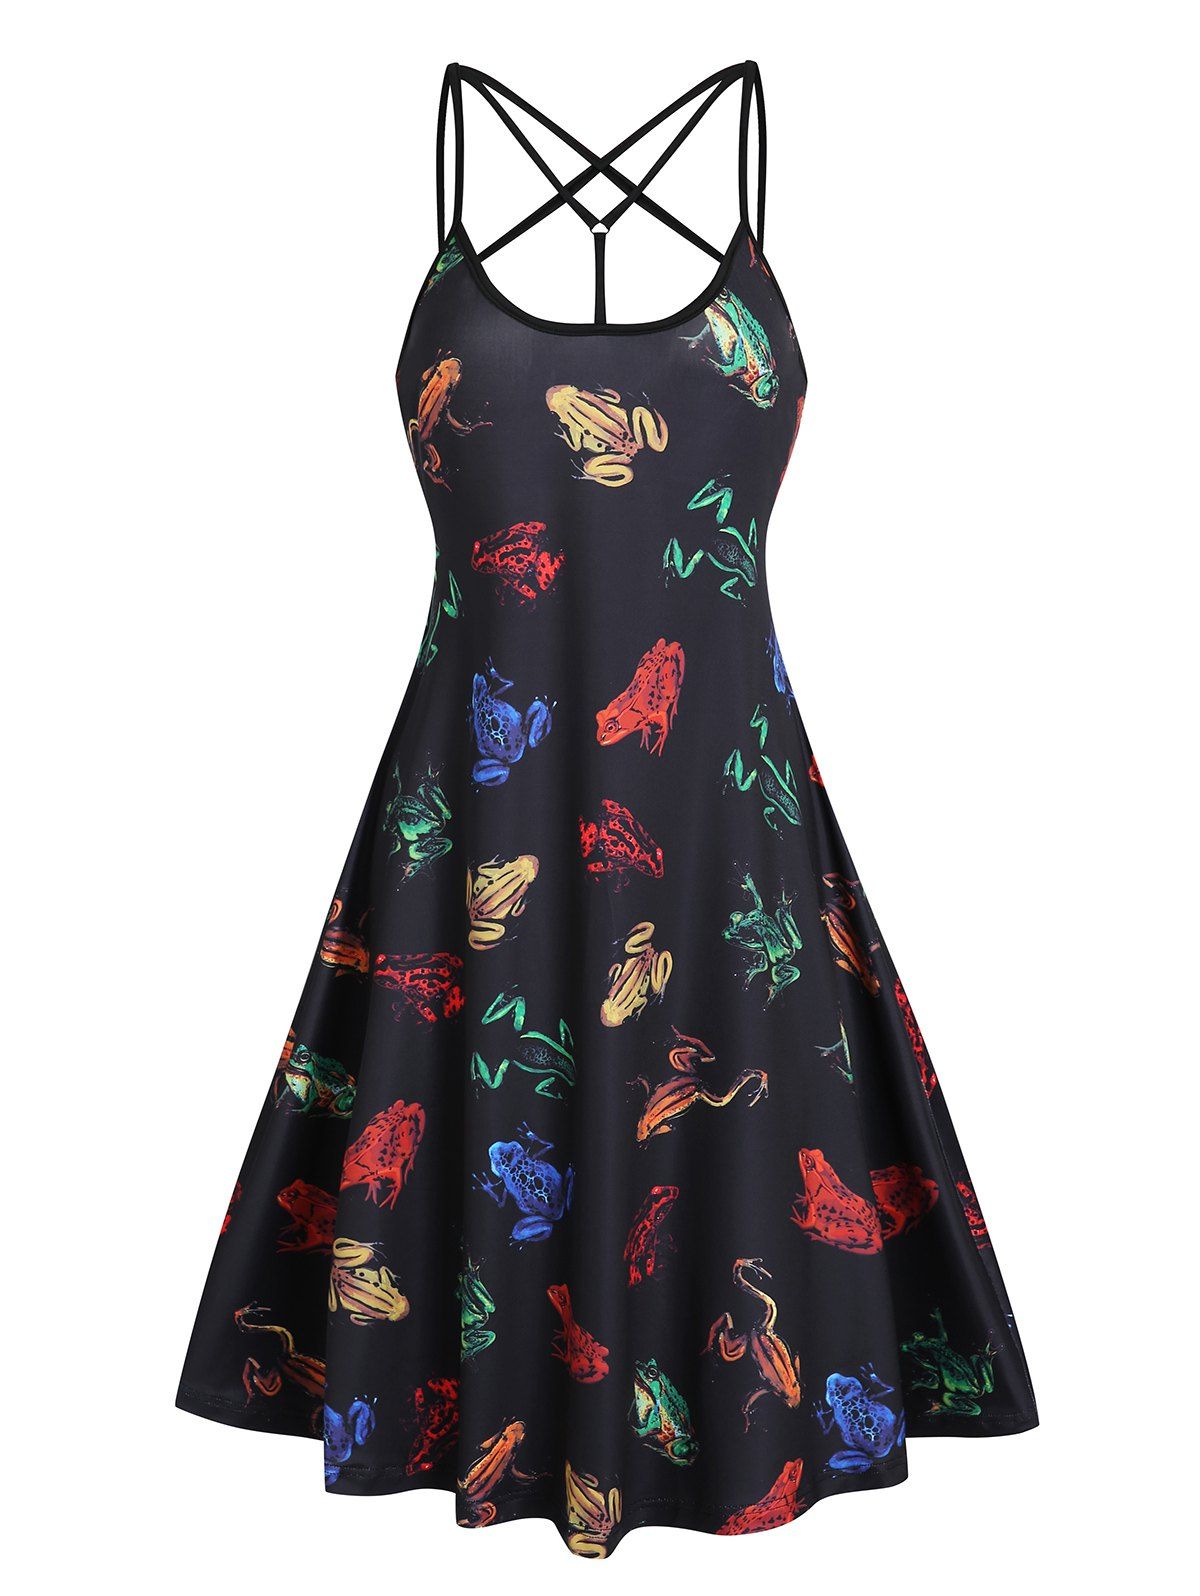 Allover 3D Frog Print Criss Cross Cami A Line Dress - BLACK M